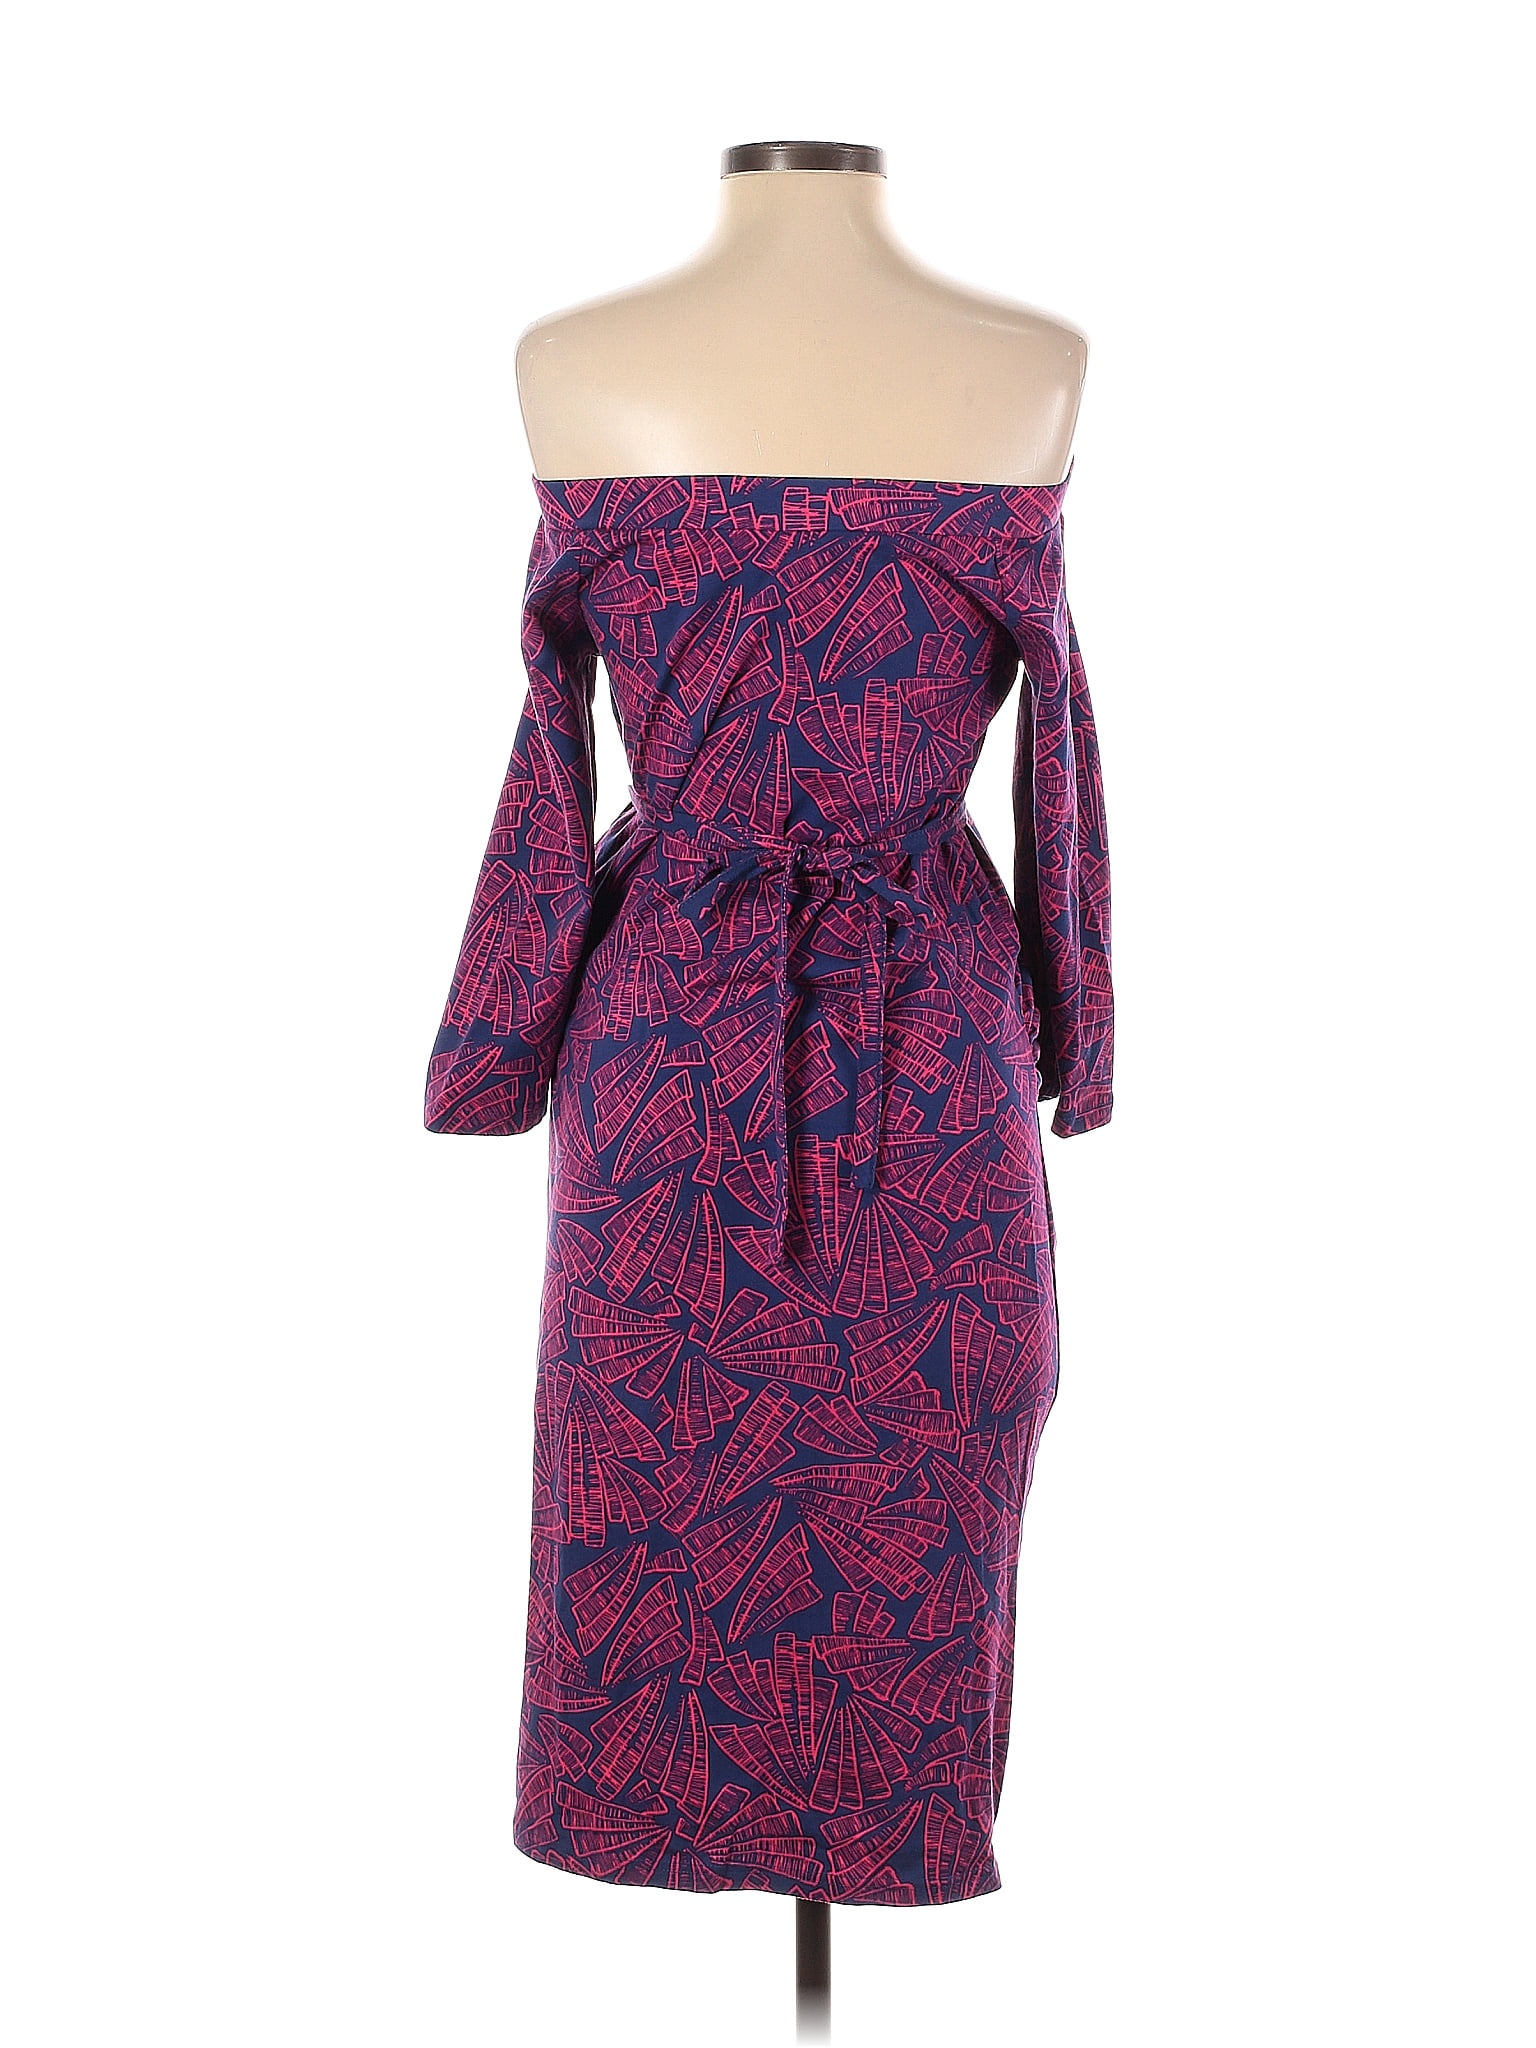 MAMA LICIOUS - Maternity Multi Color Purple Casual Dress Size S (Maternity)  - 70% off